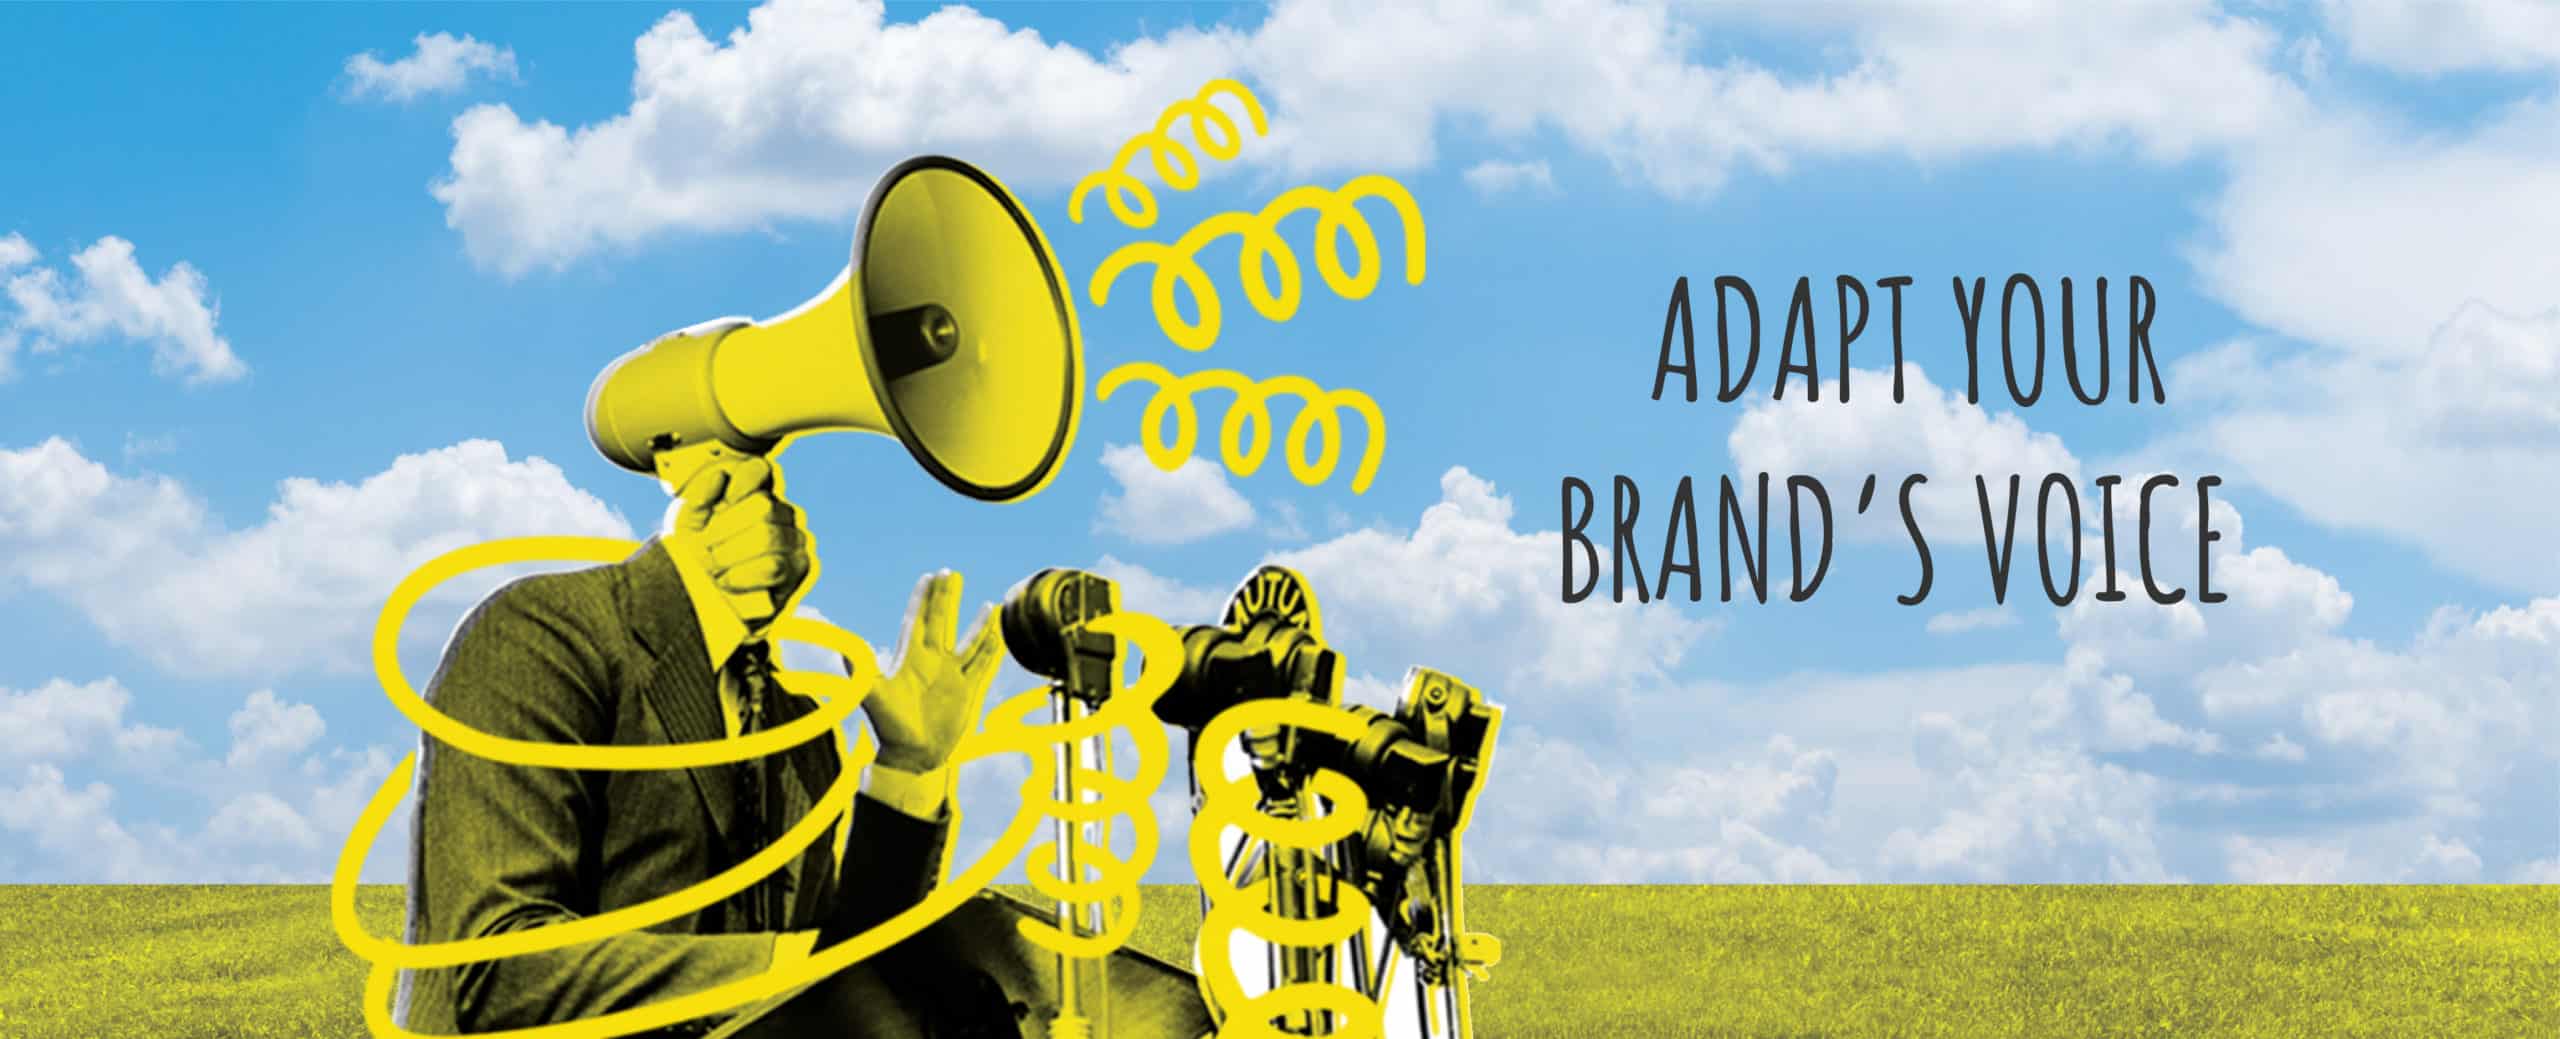 Adapt Your Brand’s Voice